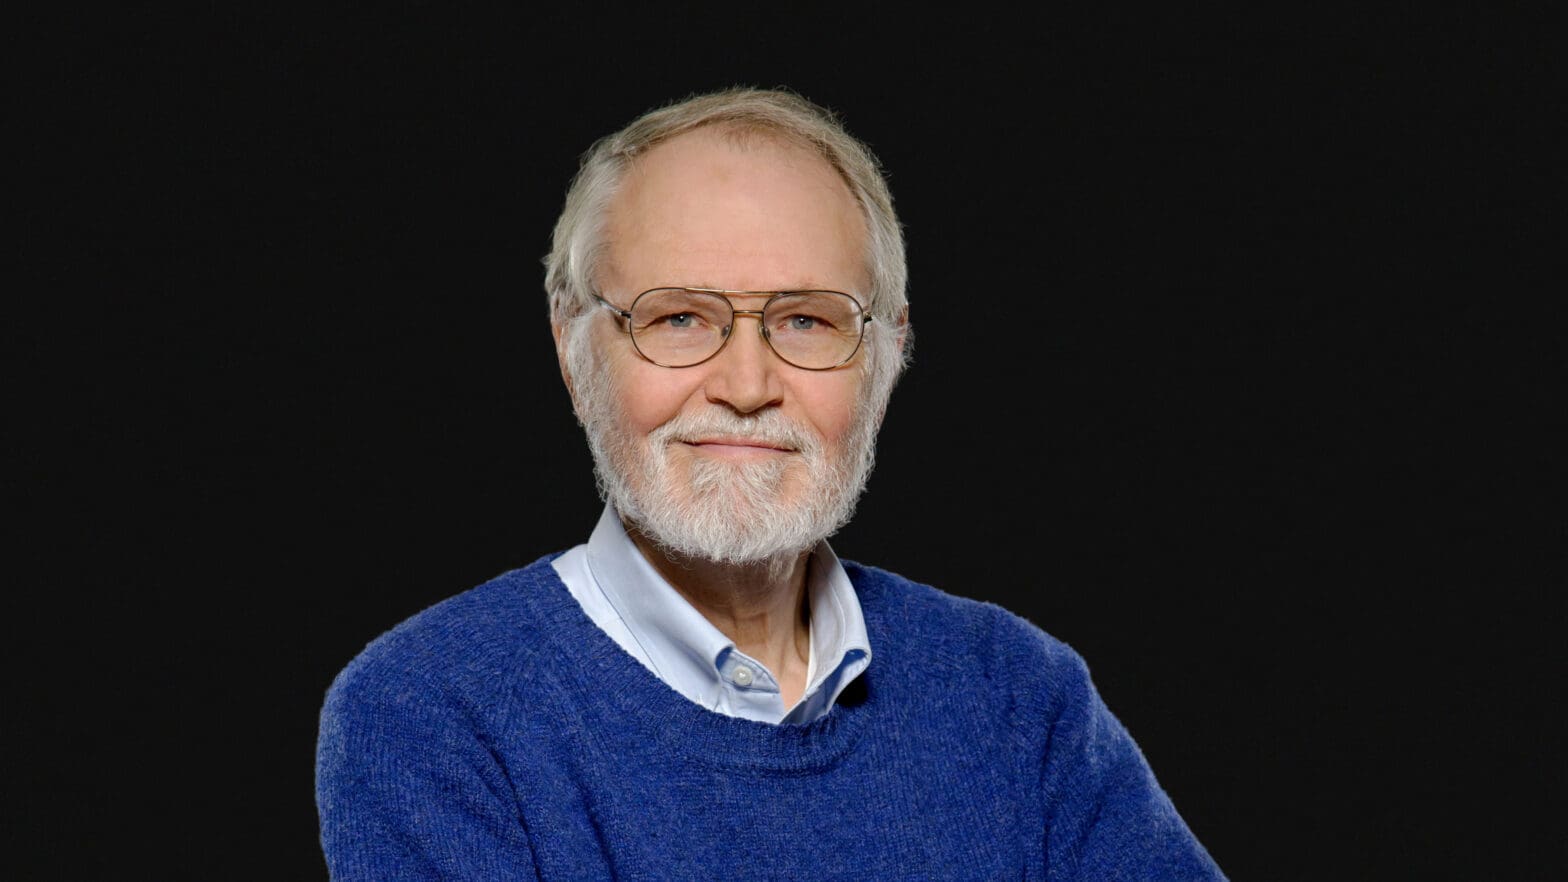 Portrait of Professor Brian Kernighan